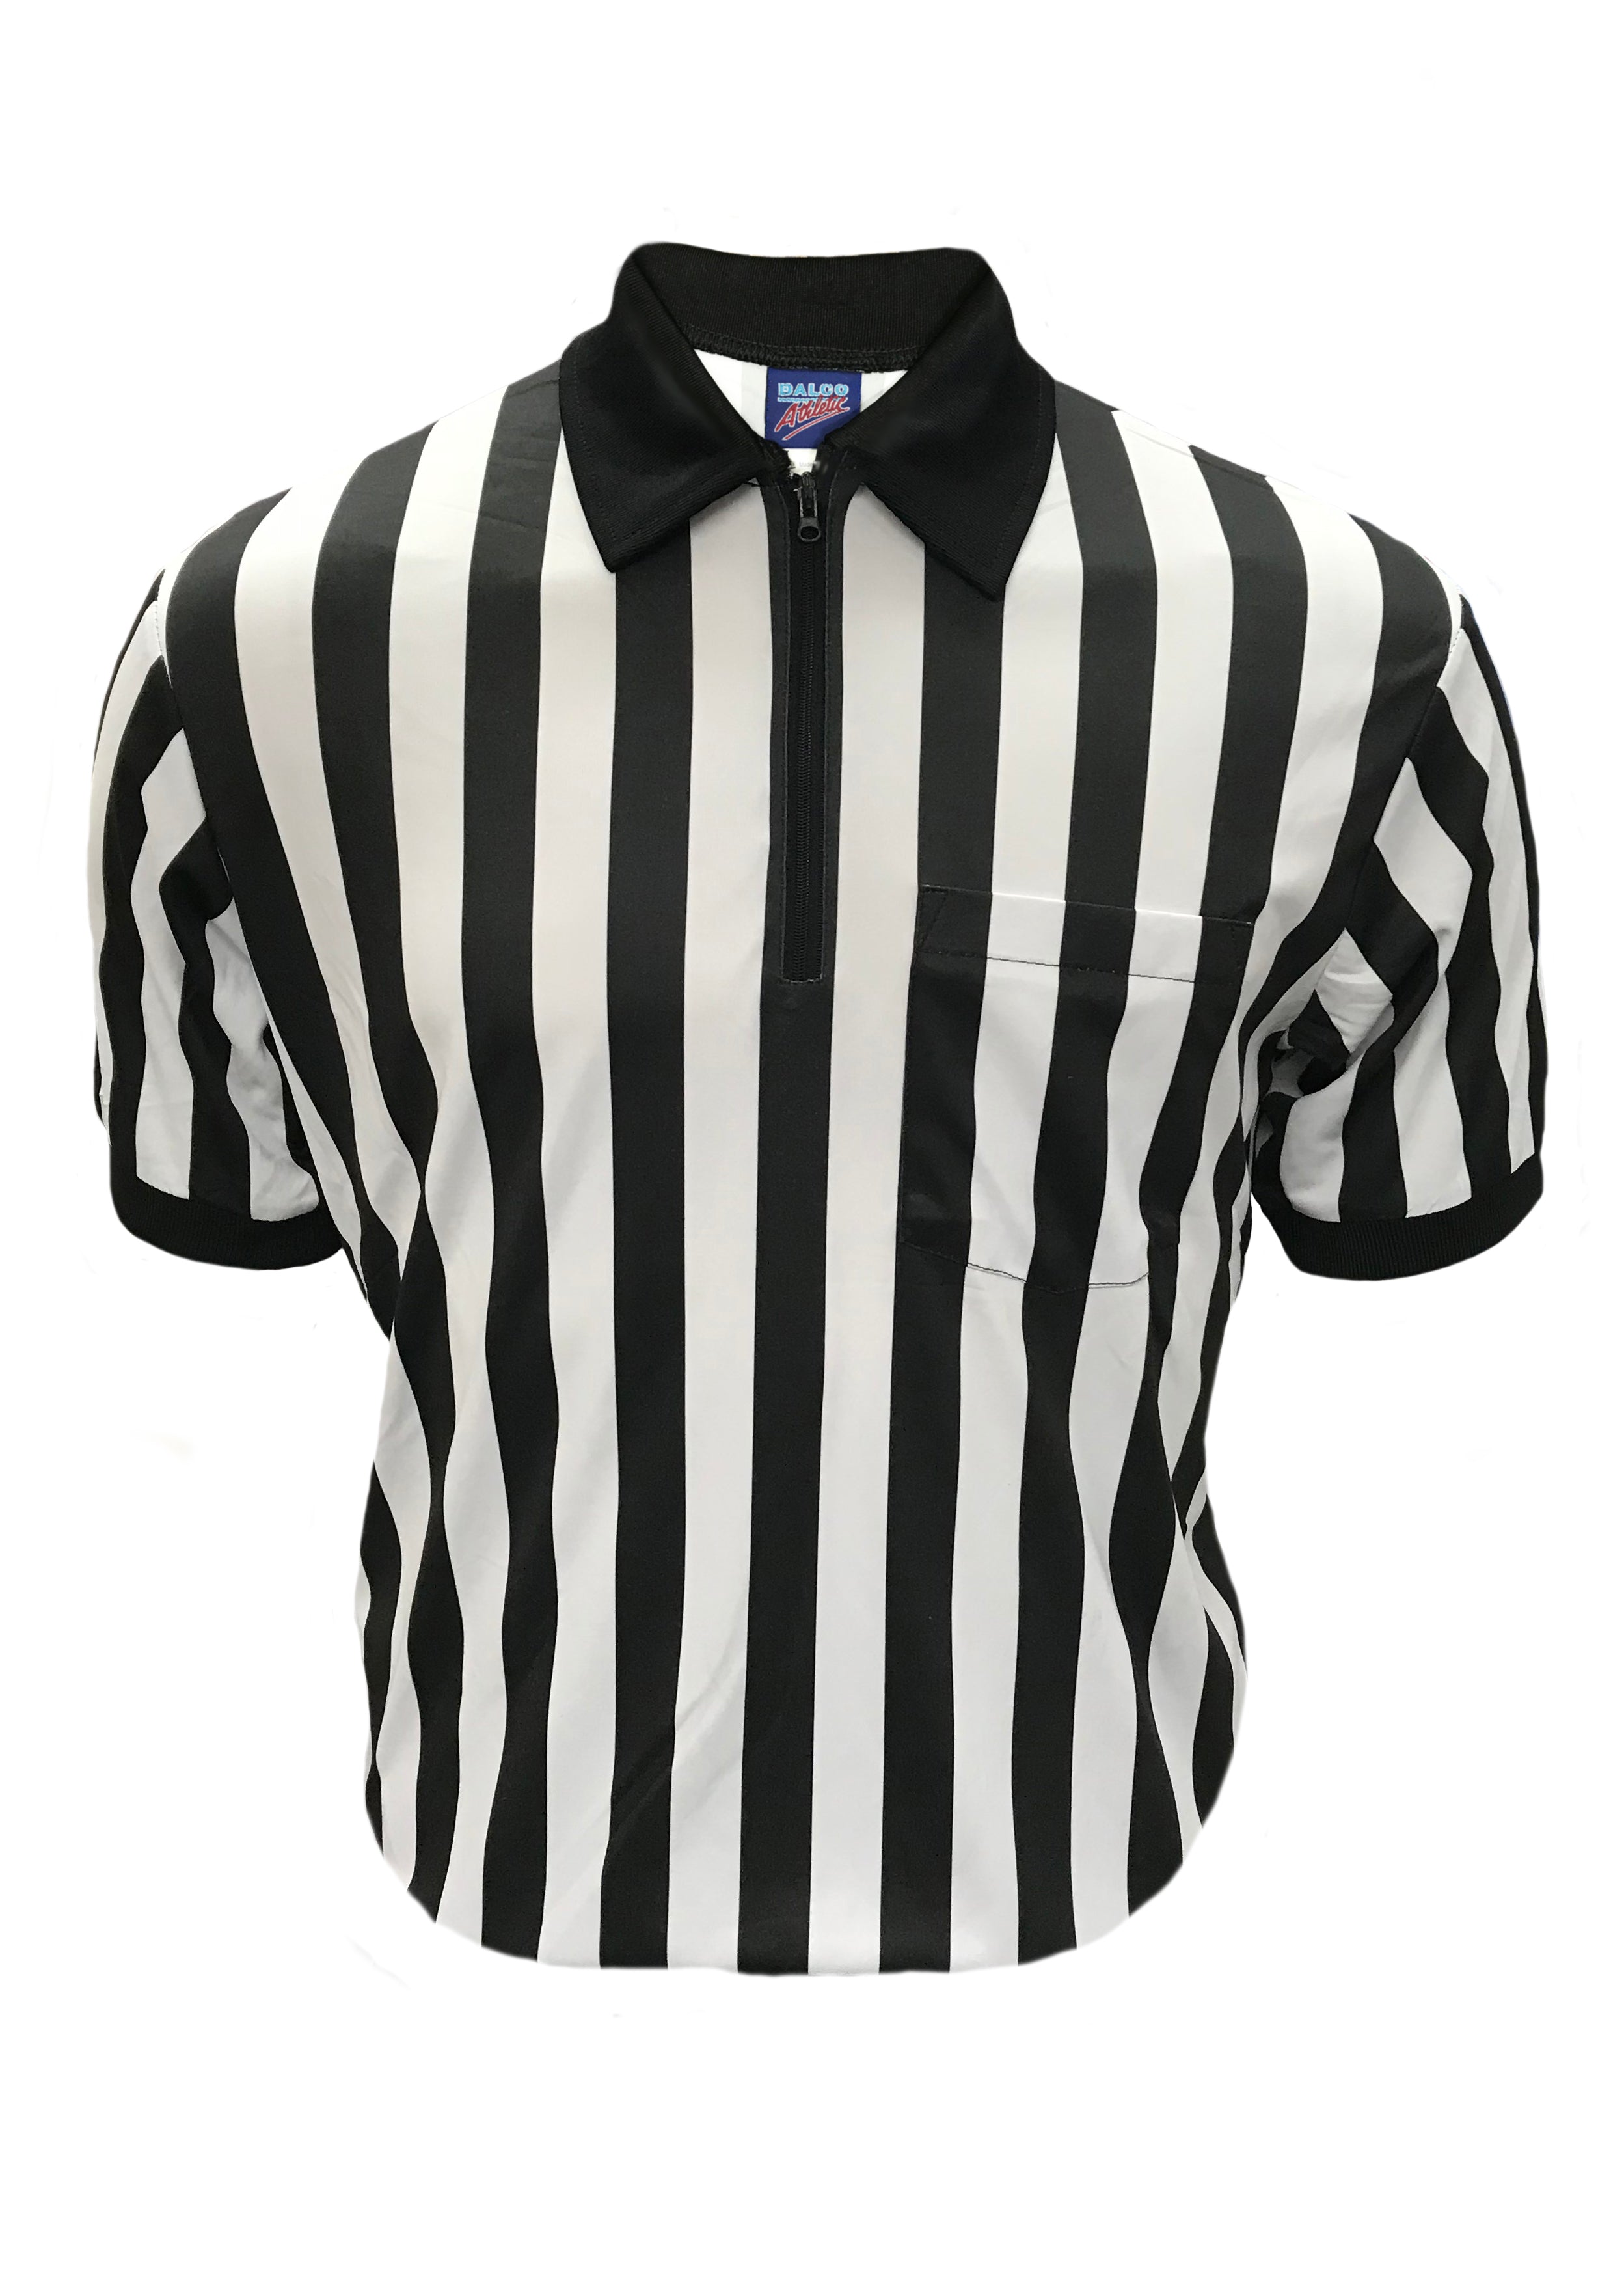 Rawlings Men's Football Referee Jersey